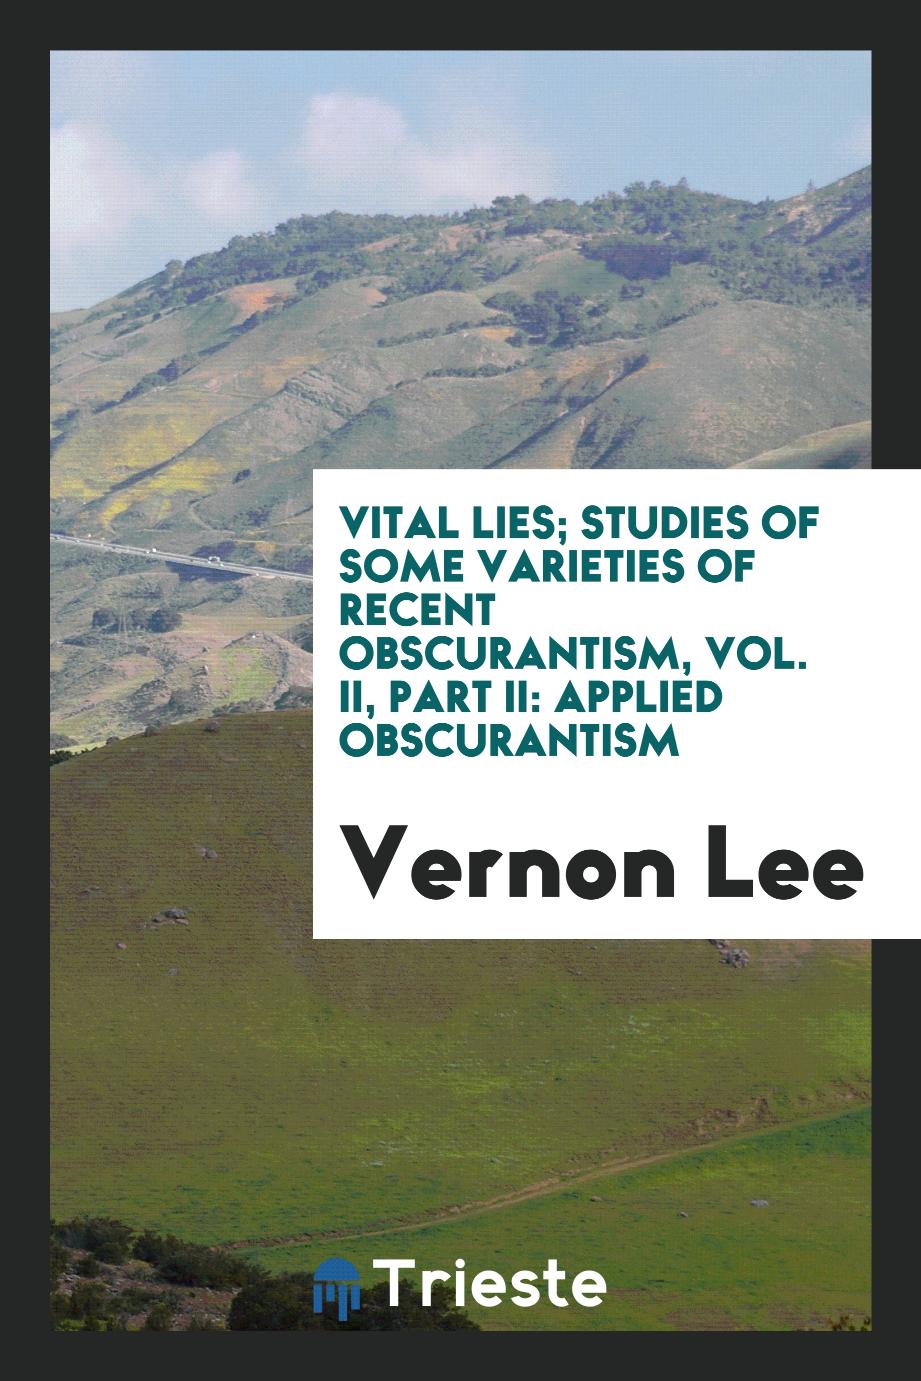 Vital lies; studies of some varieties of recent obscurantism, Vol. II, Part II: Applied obscurantism